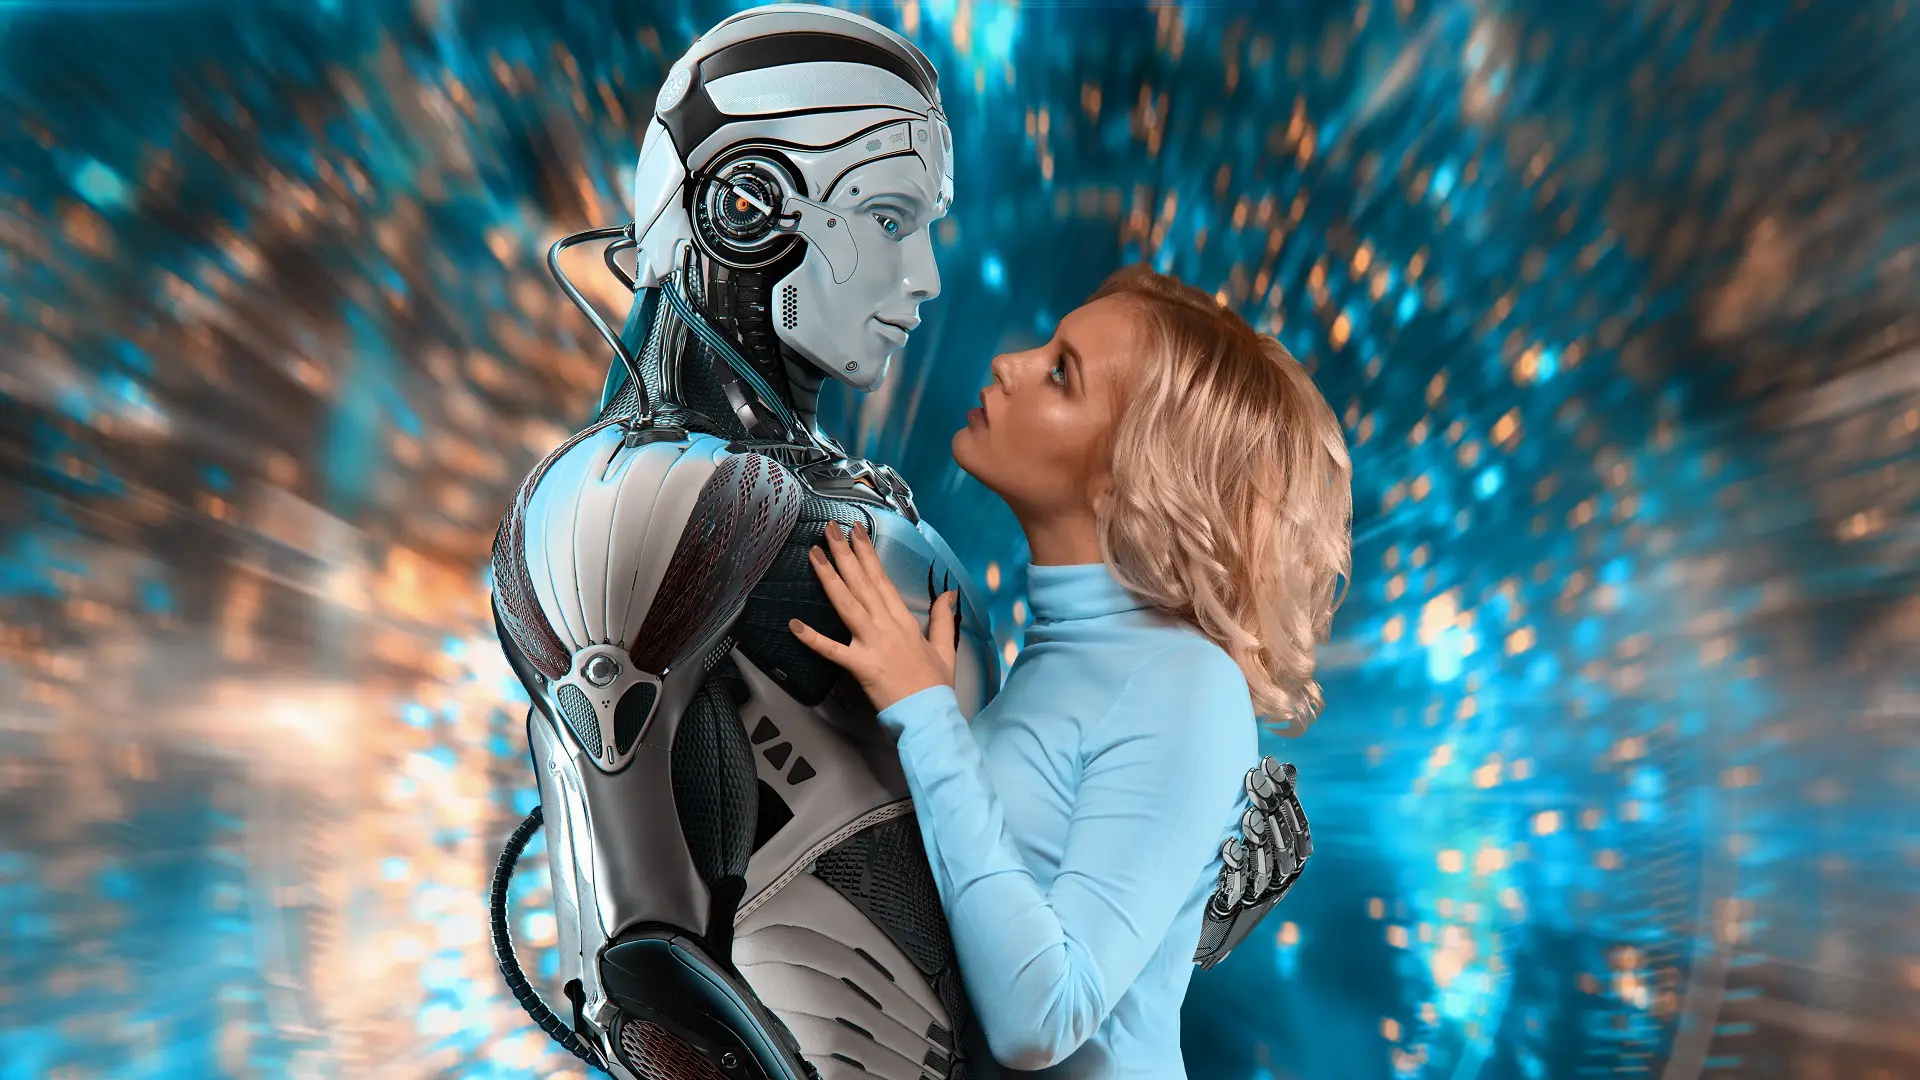 veštačka inteligencija, AI, robot, seksi, tehnologija - shutterstock-661fd3d98d20c.webp